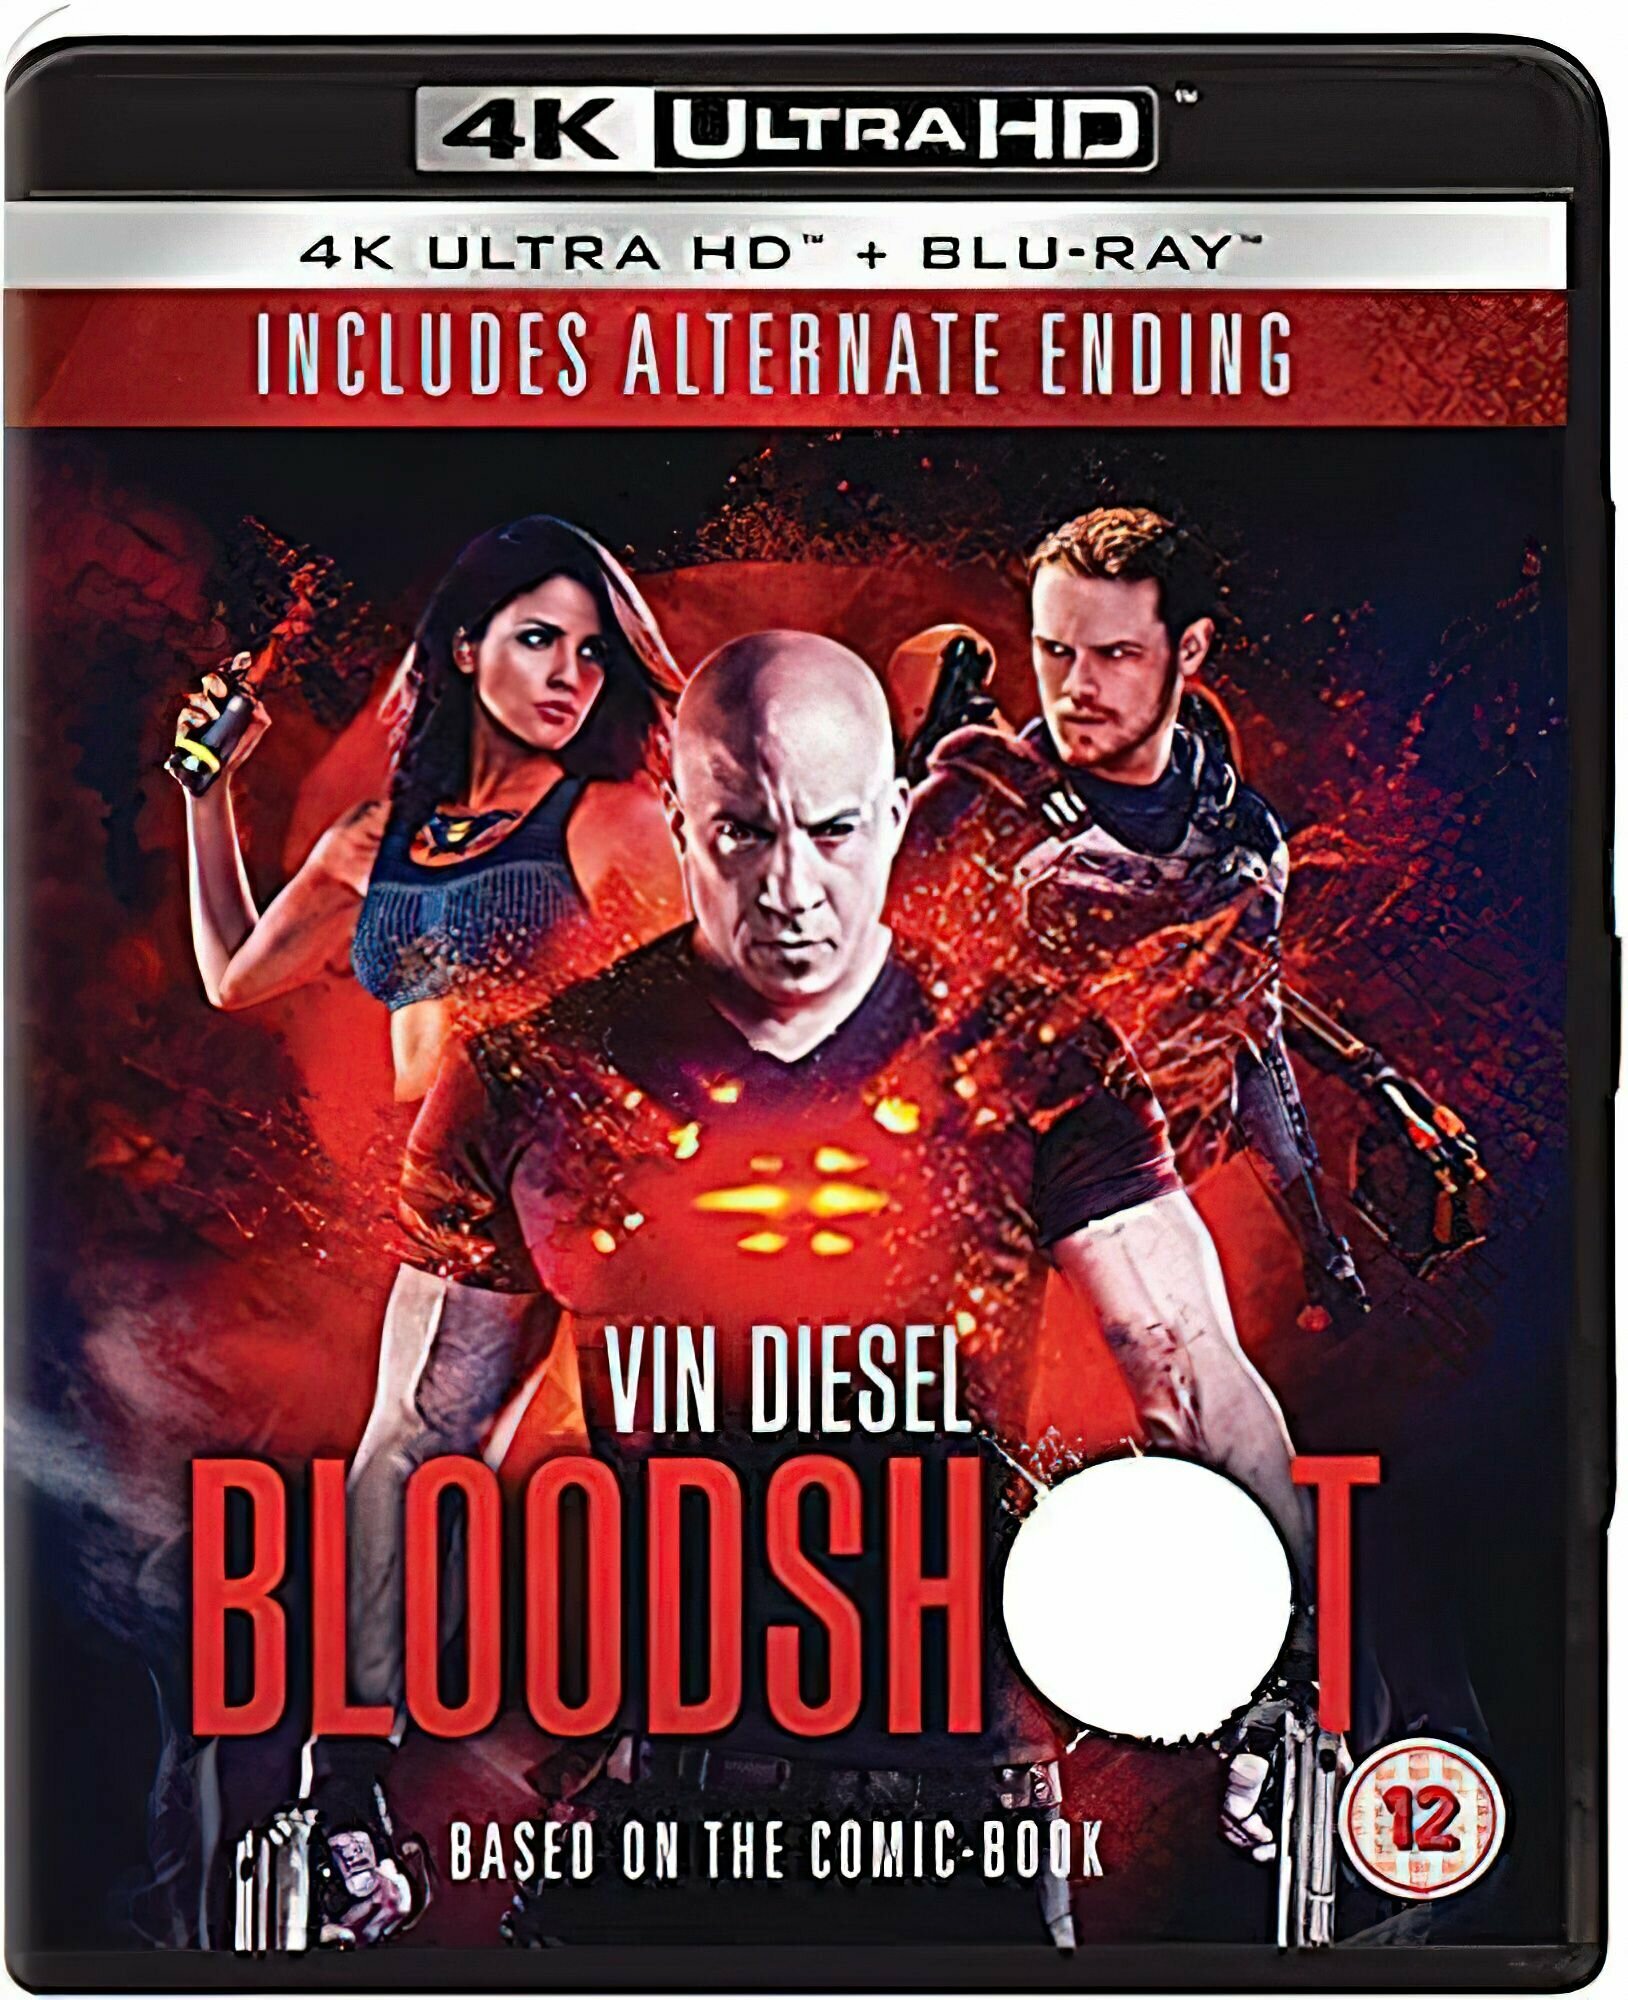 Бладшот. Bloodshot (2020, 4K UHD Blu-ray + Blu-ray, фильм) фантастика, боевик c Вином Дизелем / 16+, импортное издание с русским языком